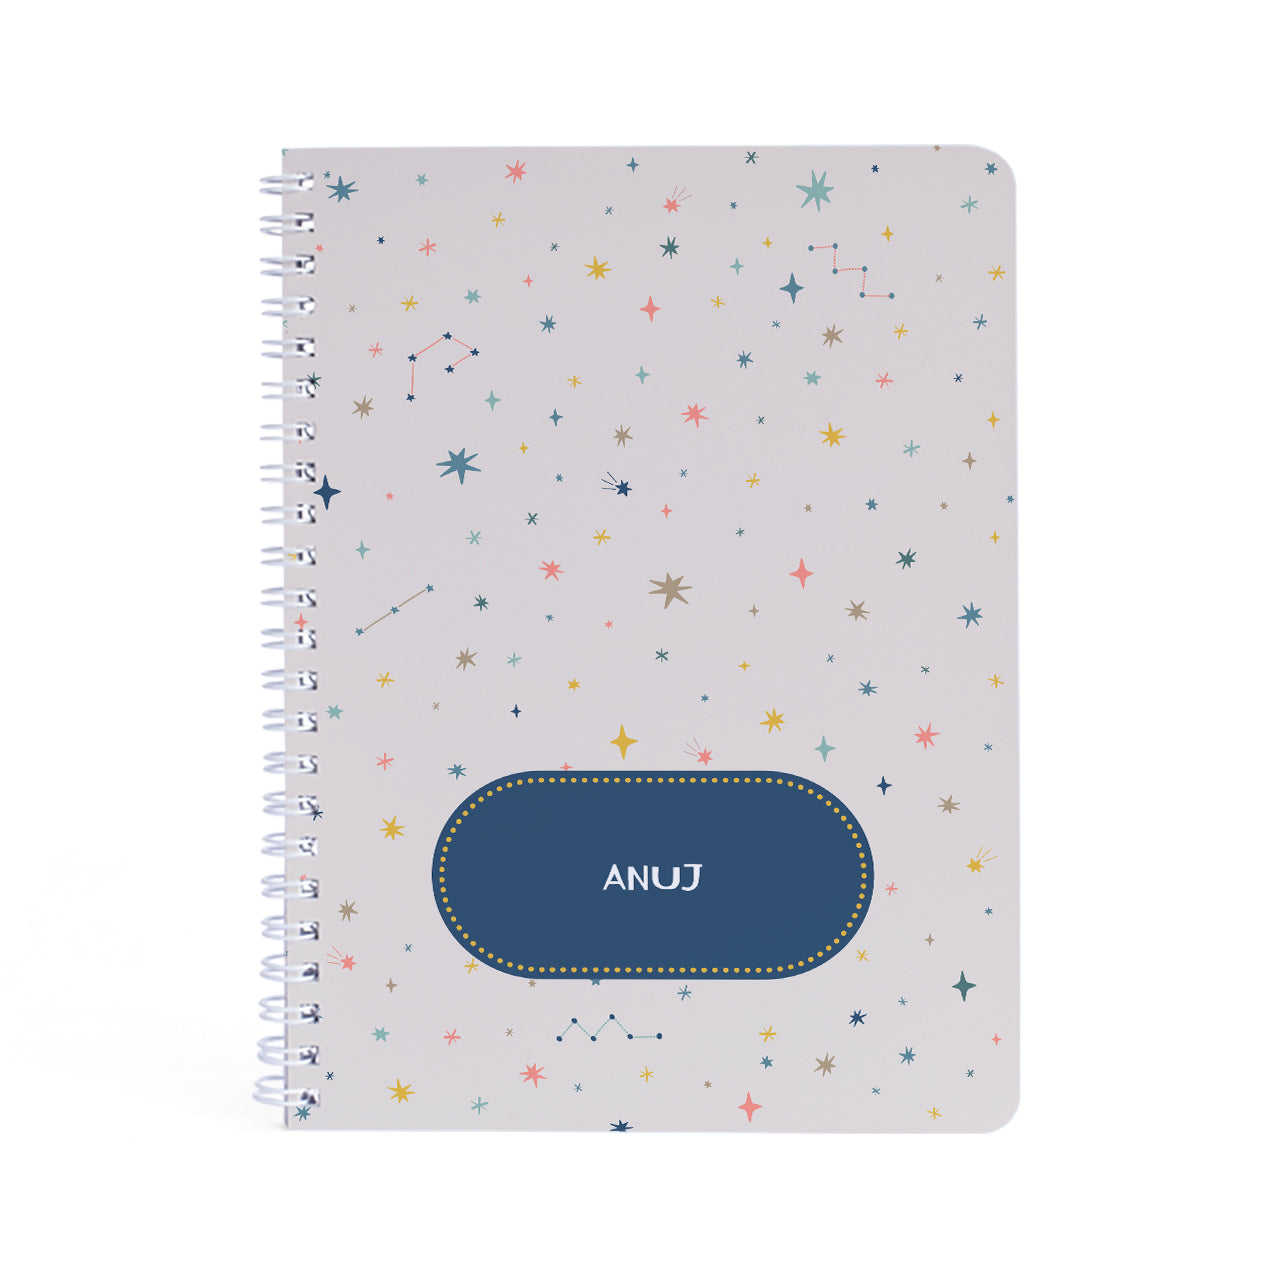 Personalised Spiral Notebook - Twinkling Stars